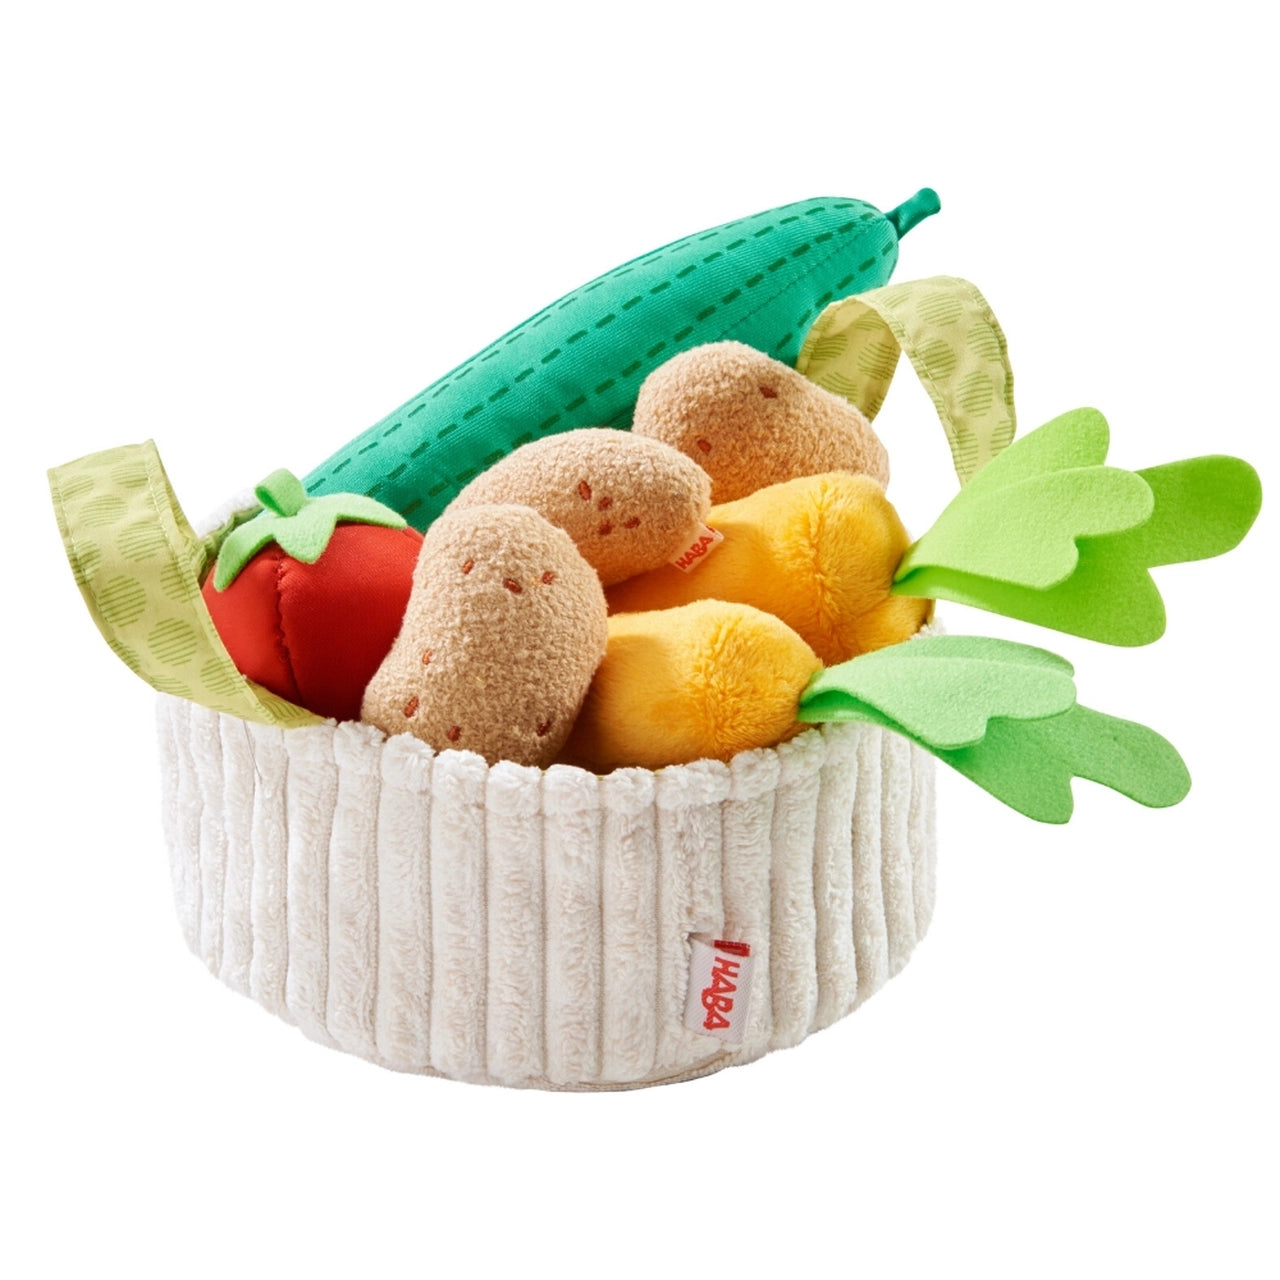 HABA Biofino Vegetable Basket Soft Play Food